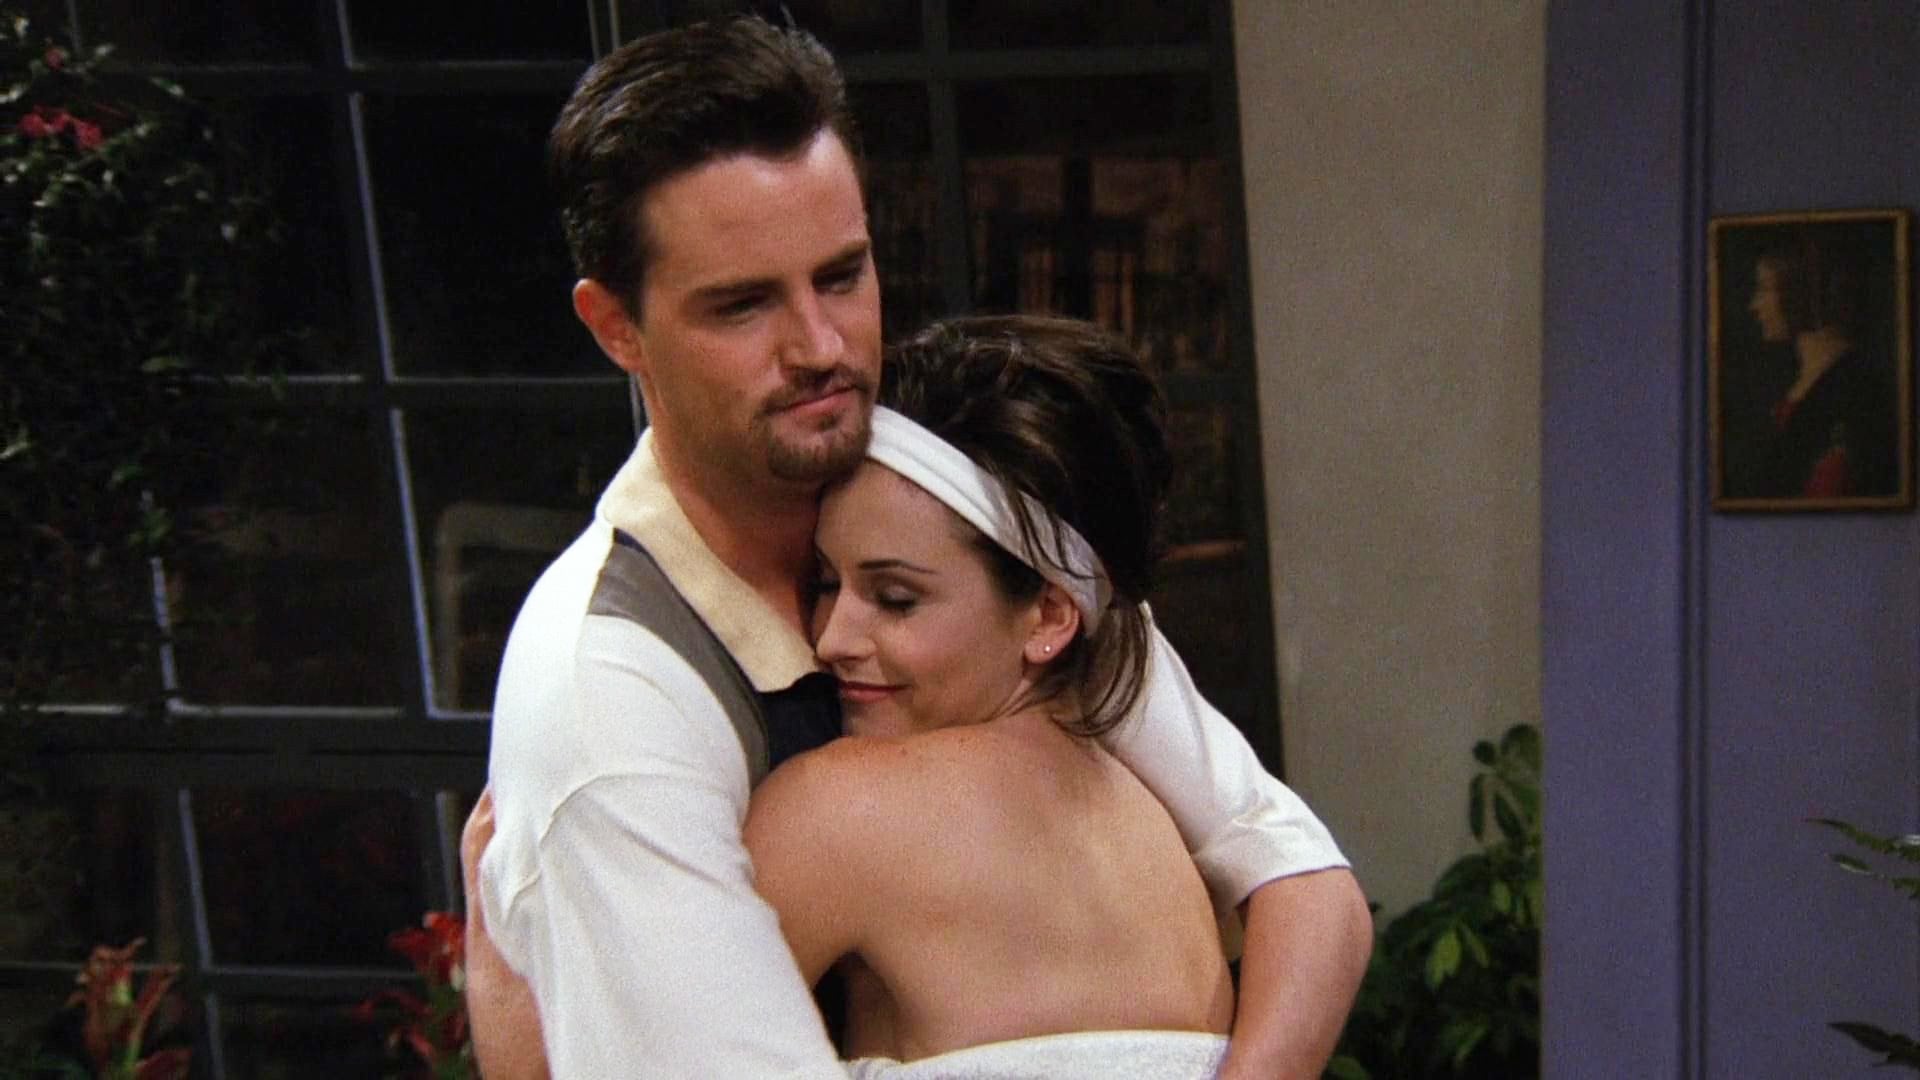 Monica and Joey - Friends Season 3 Episode 6 - TV Fanatic